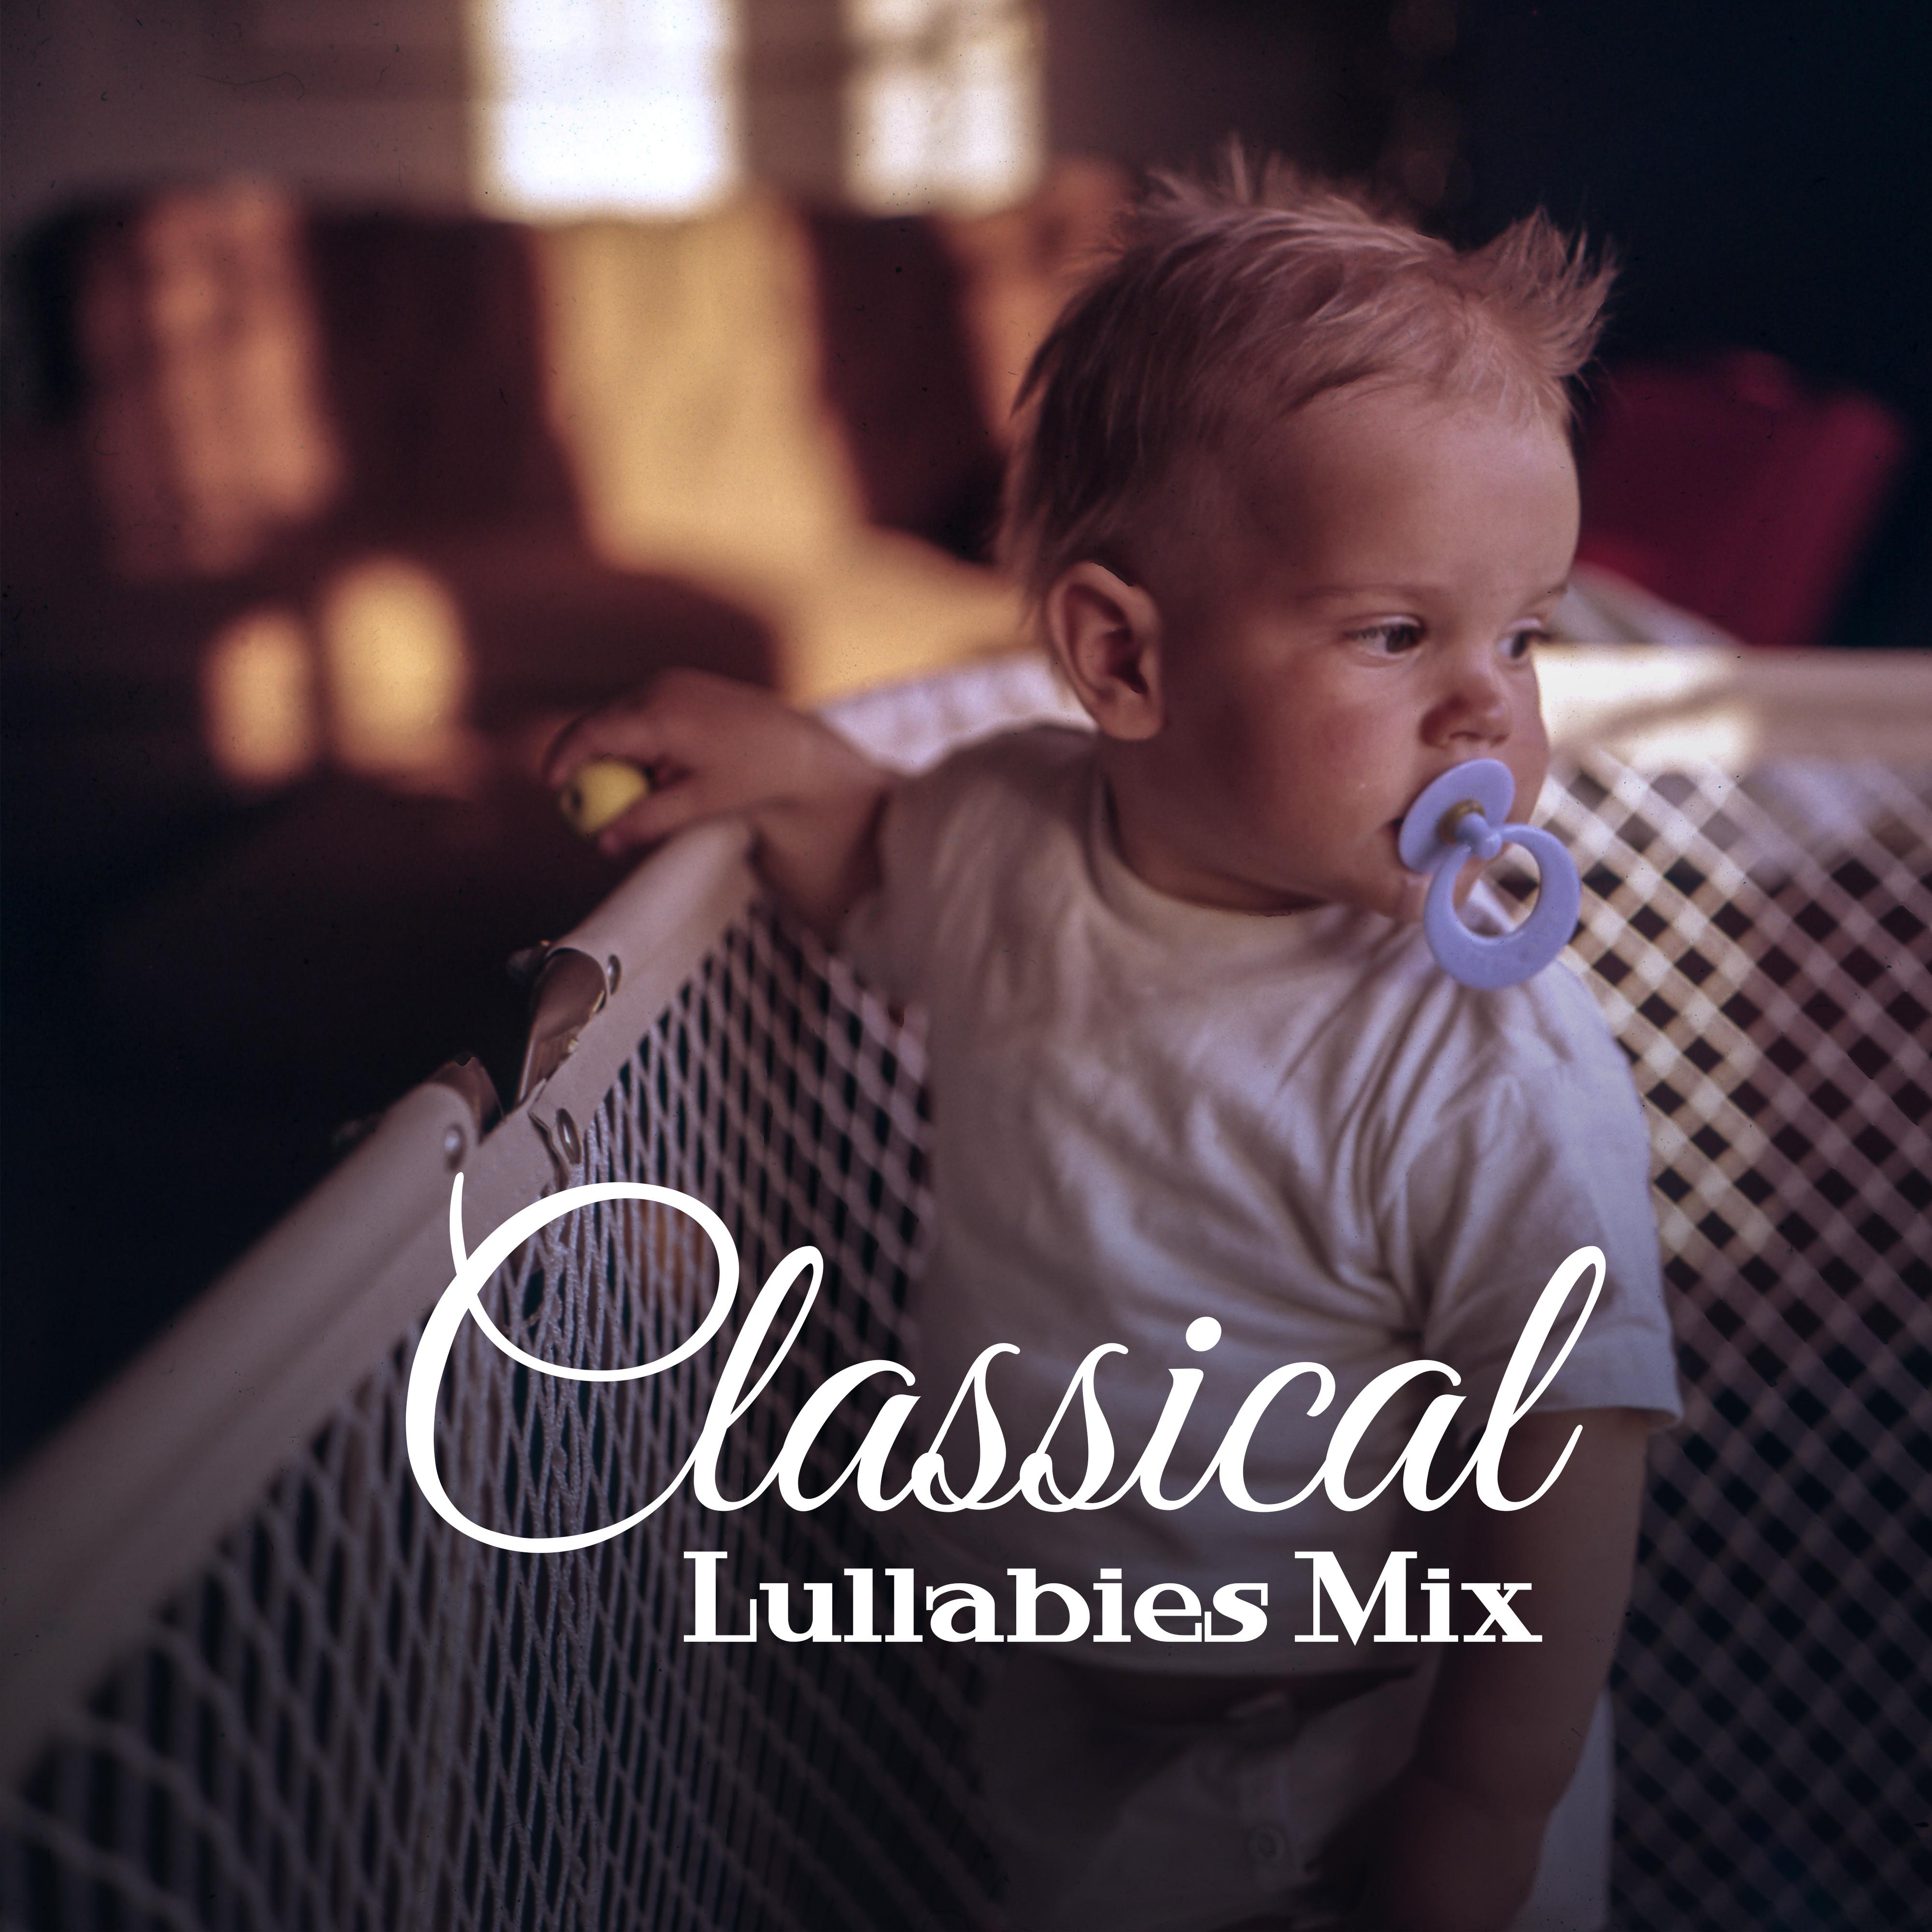 Classical Lullabies Mix  Classical Music, Lullabies for Babies, Ludwig van Beethoven, Johannes Brahms